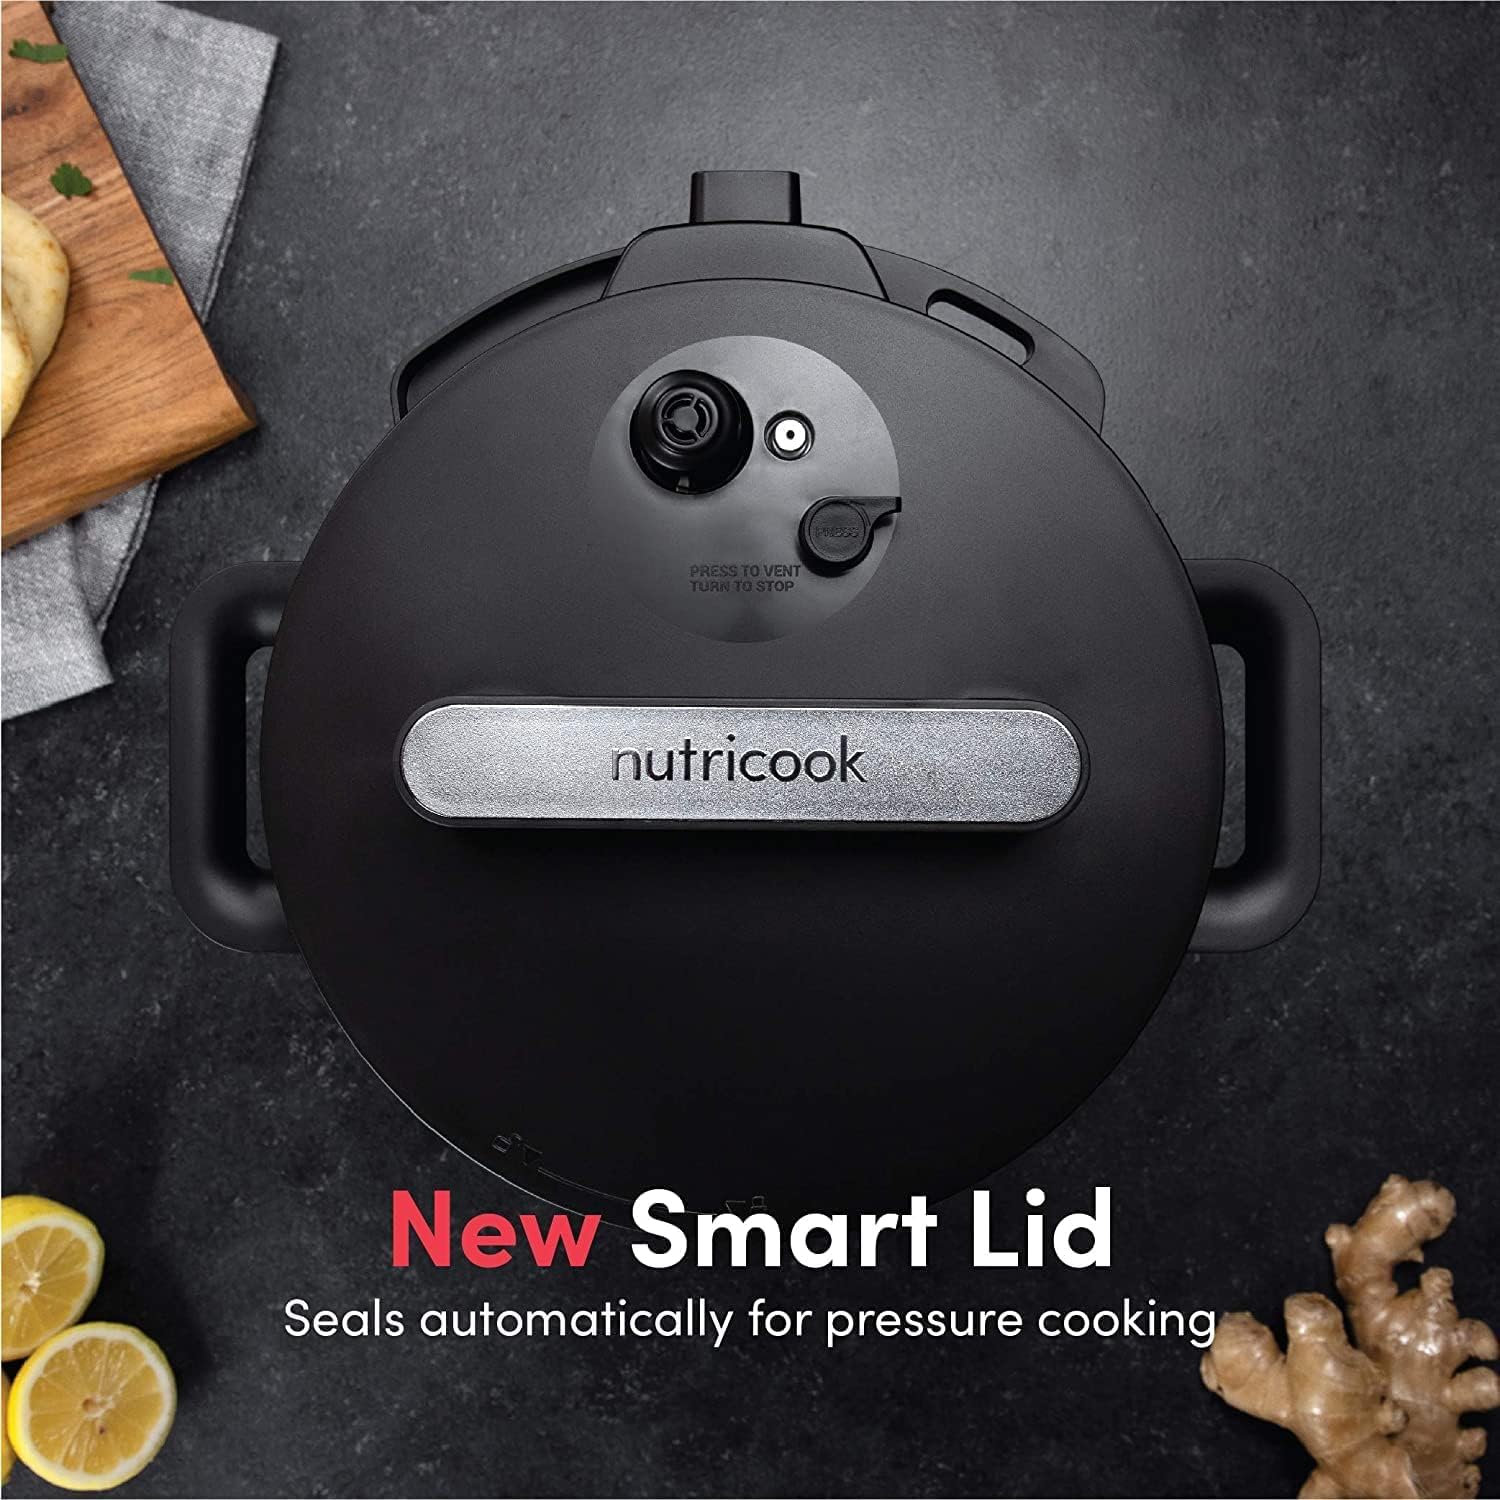 Nutricook Smartpot 2 / 8L / Electric Pressure Cooker - Black